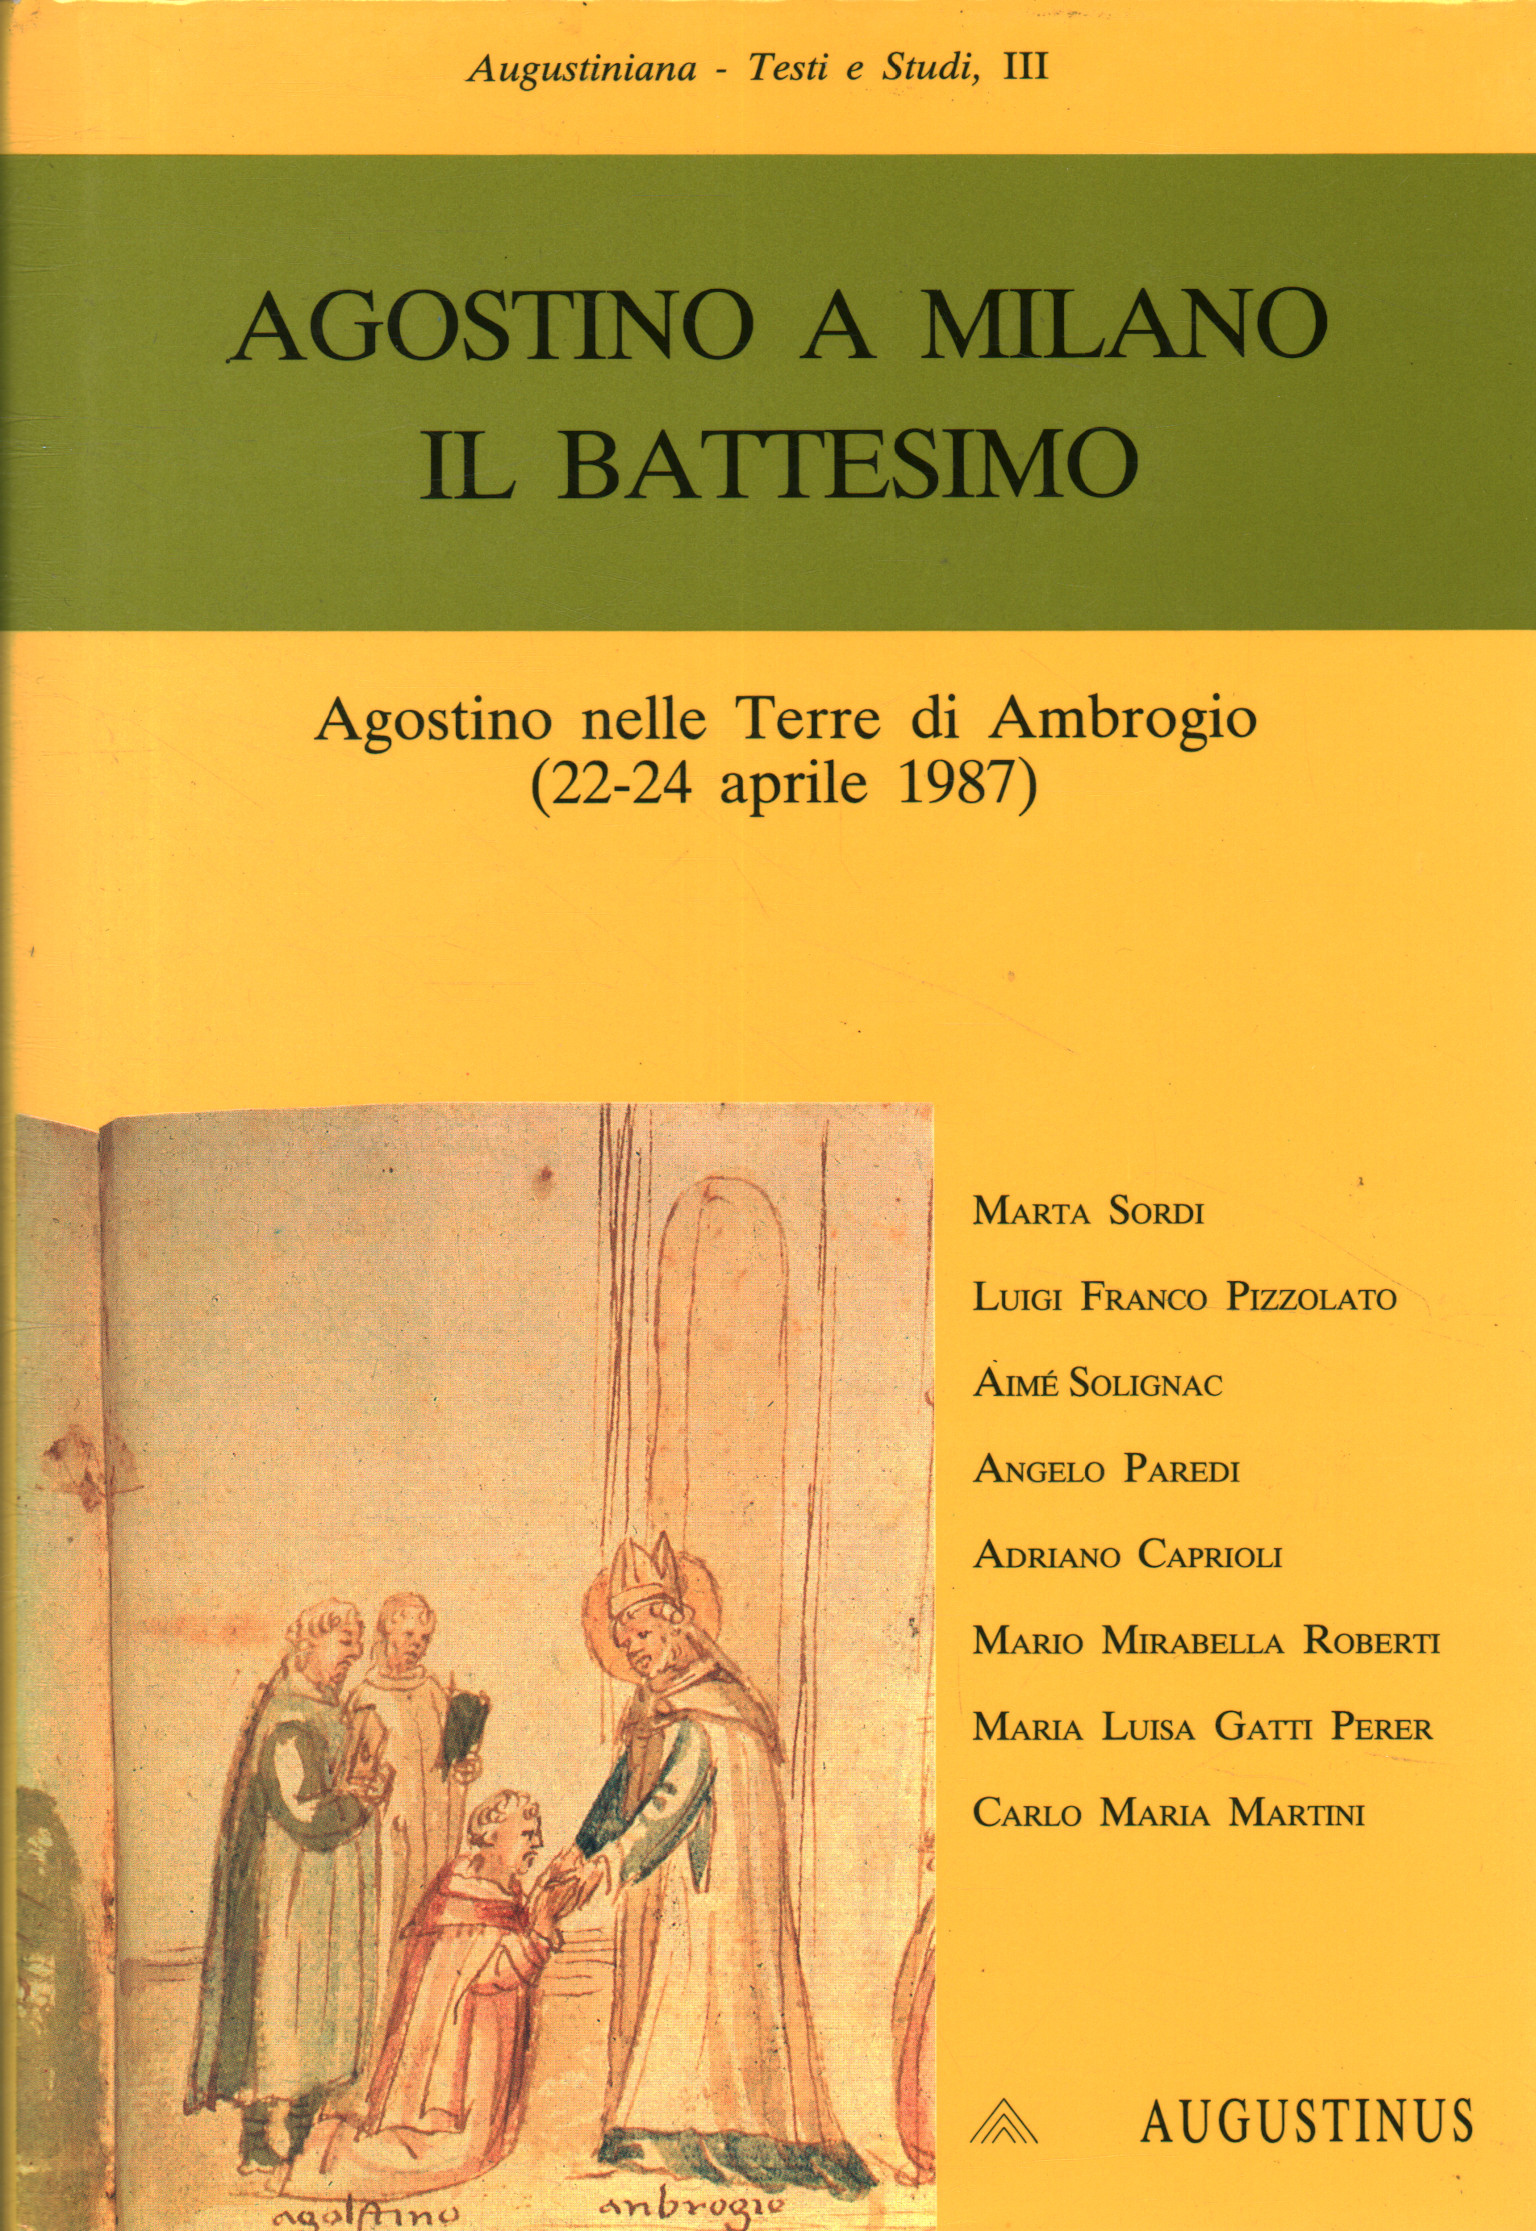 Augustinus in Mailand: Taufe